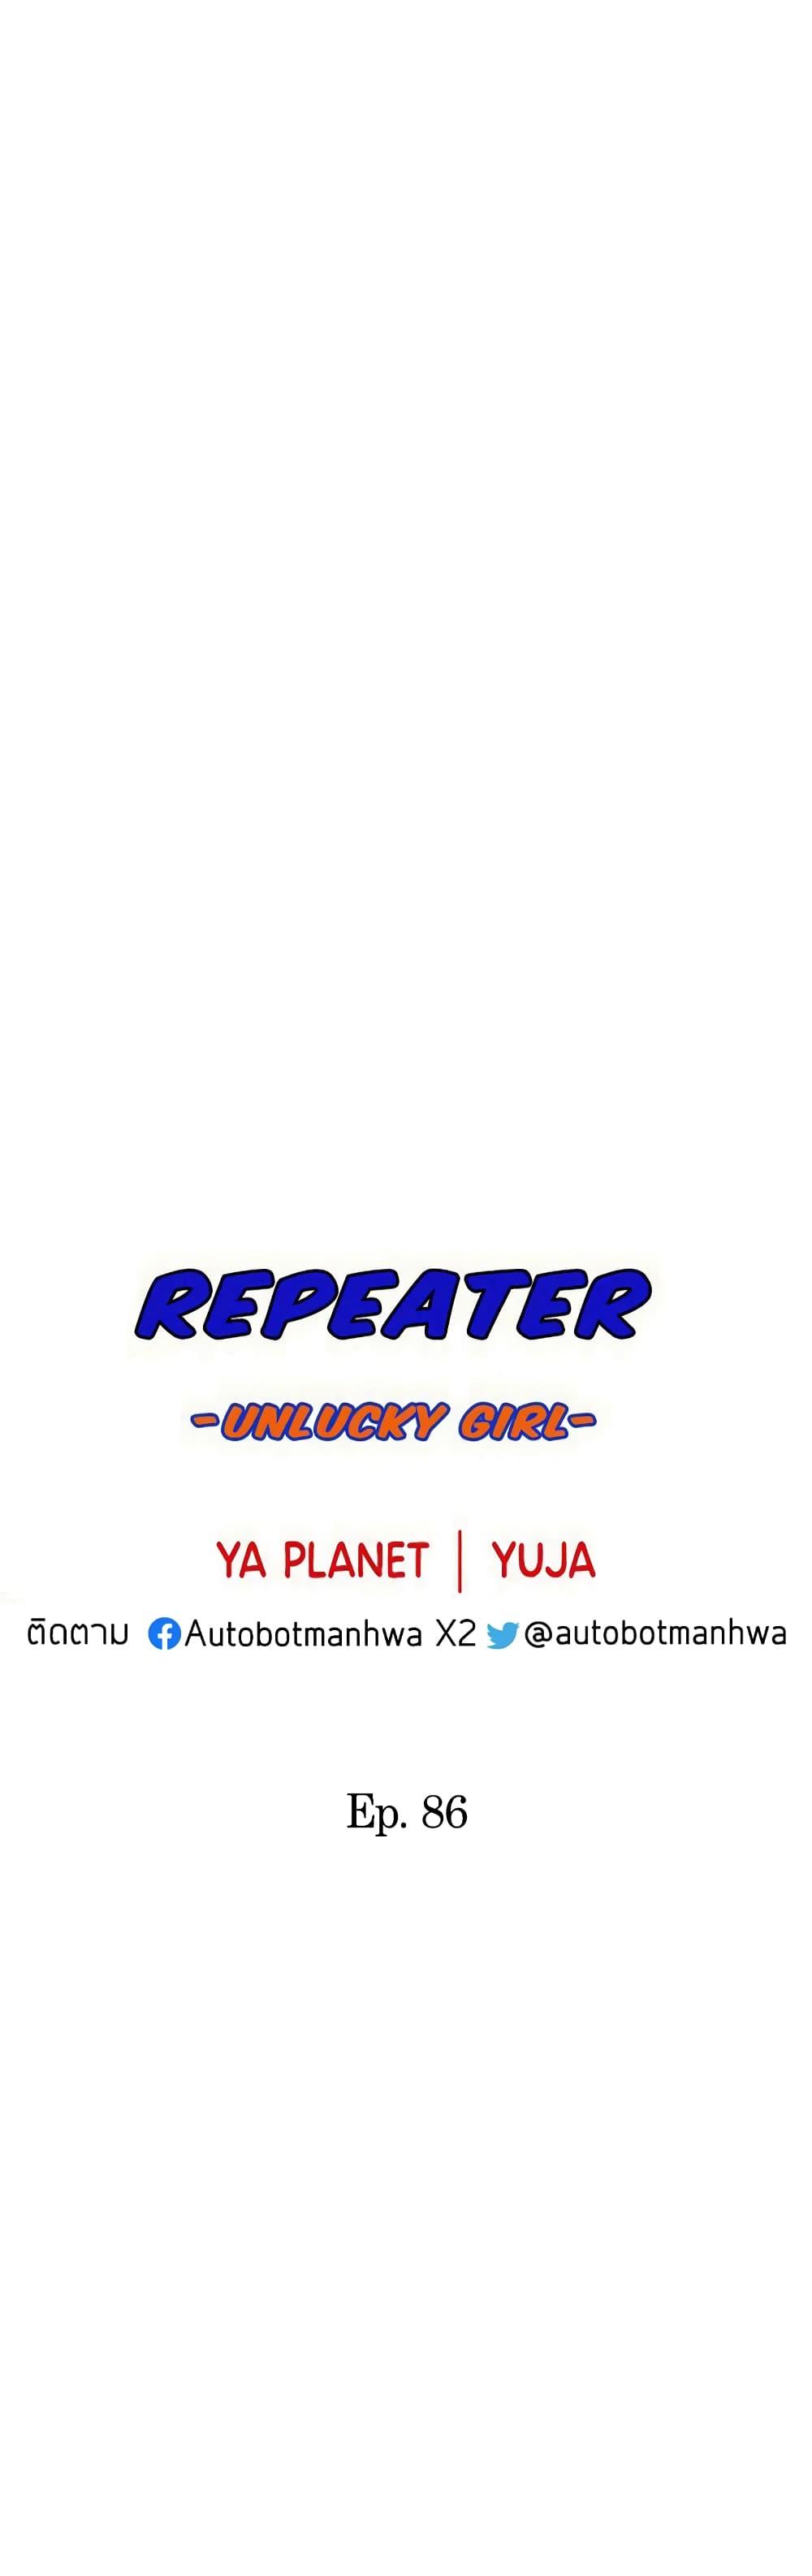 Repeater 86 04